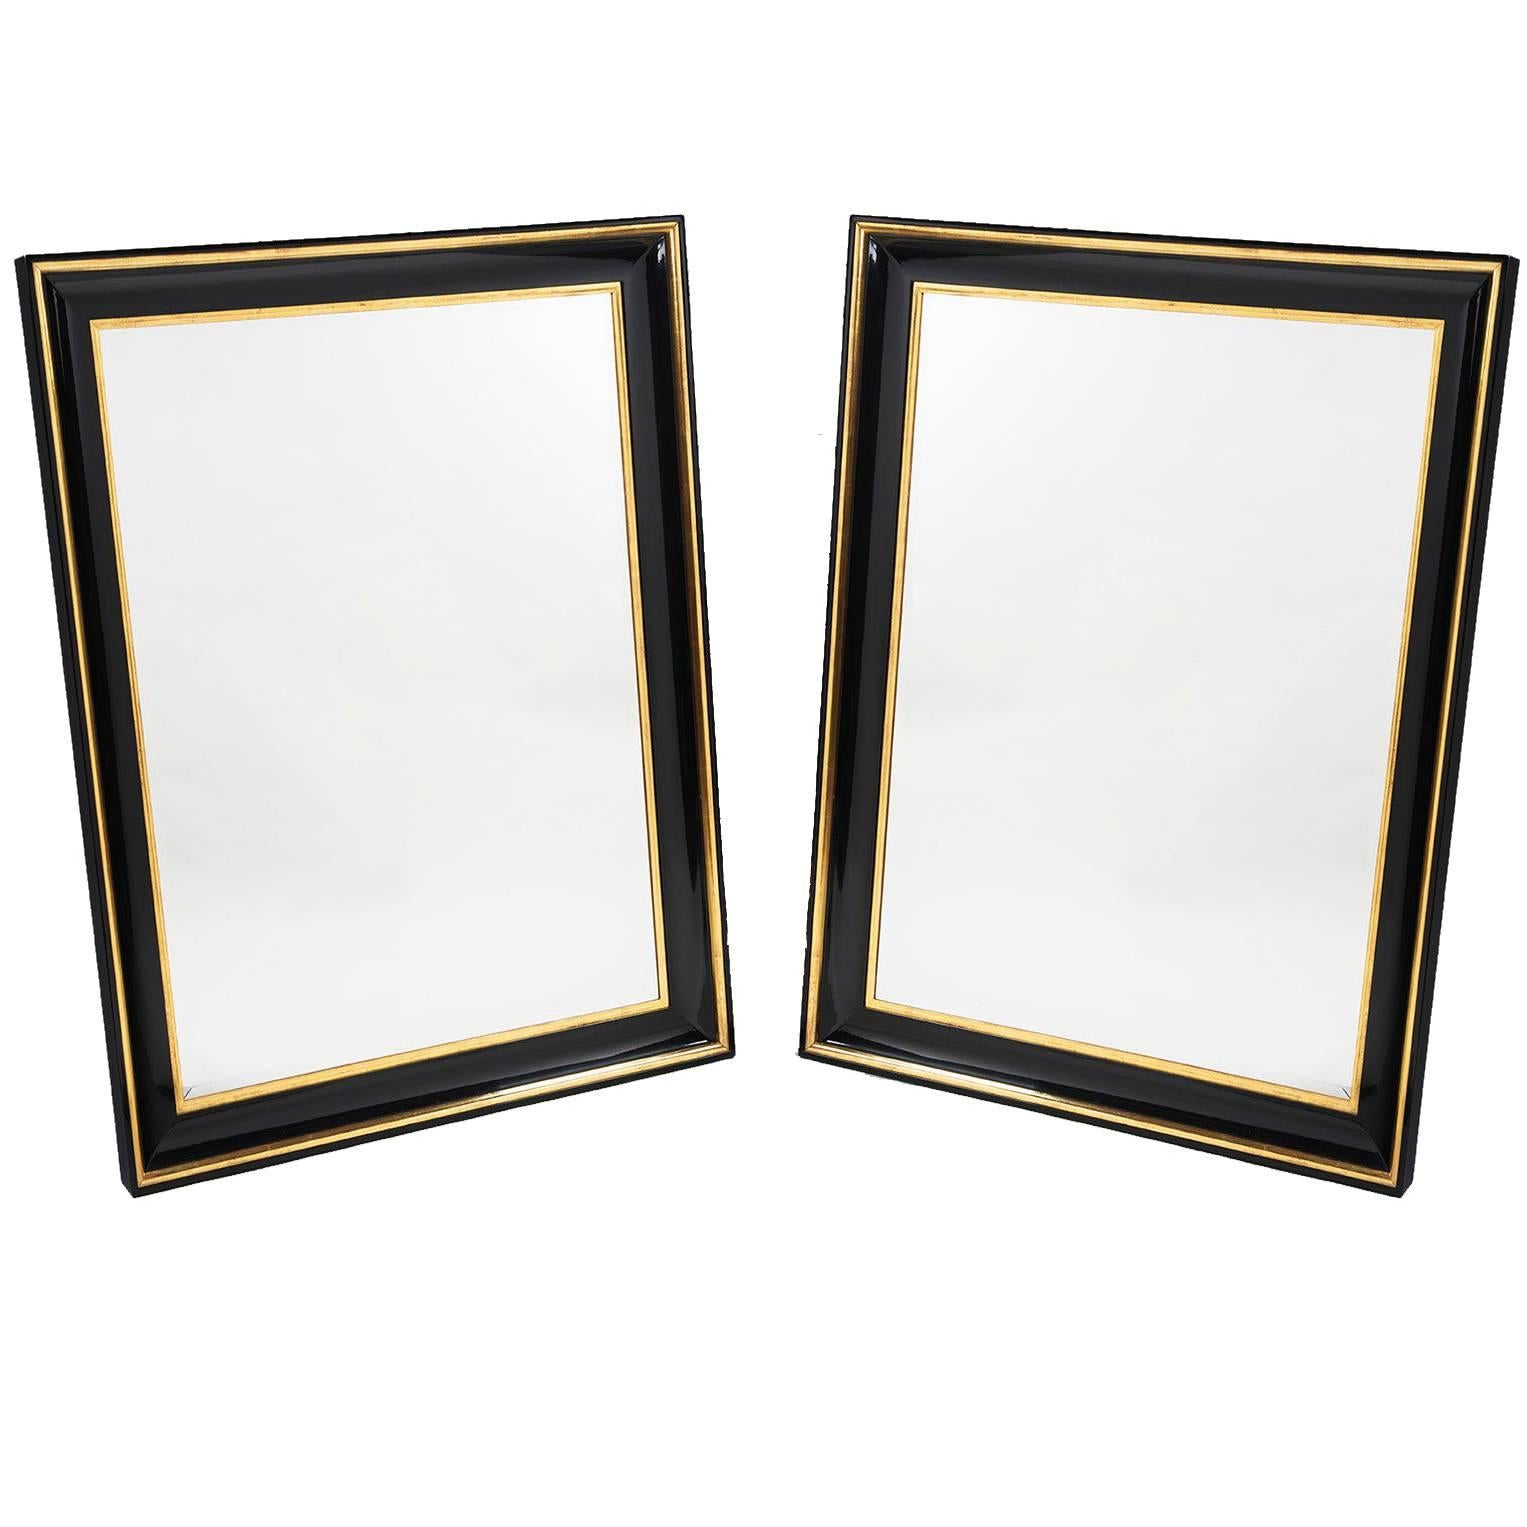 Pair of Biedermeier Style Mirrors by Iliad Design For Sale